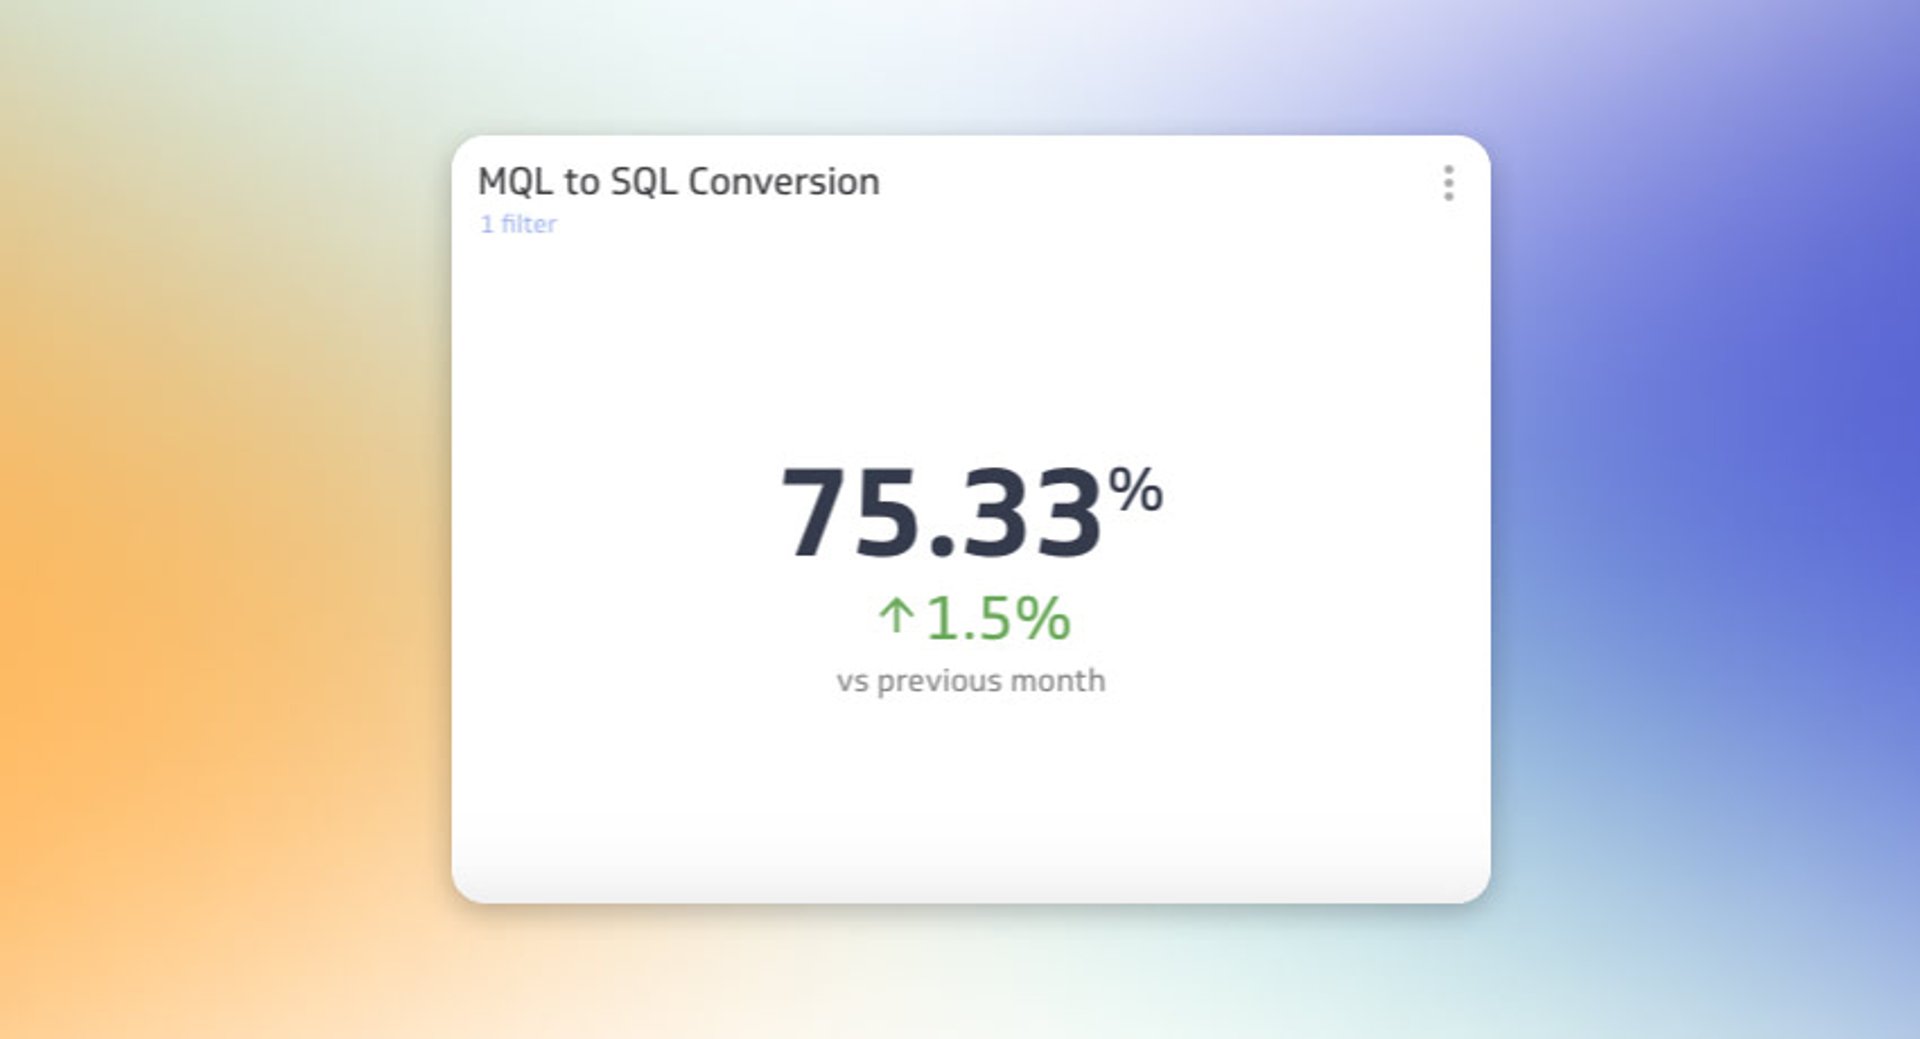 Mql to SQL Conversion